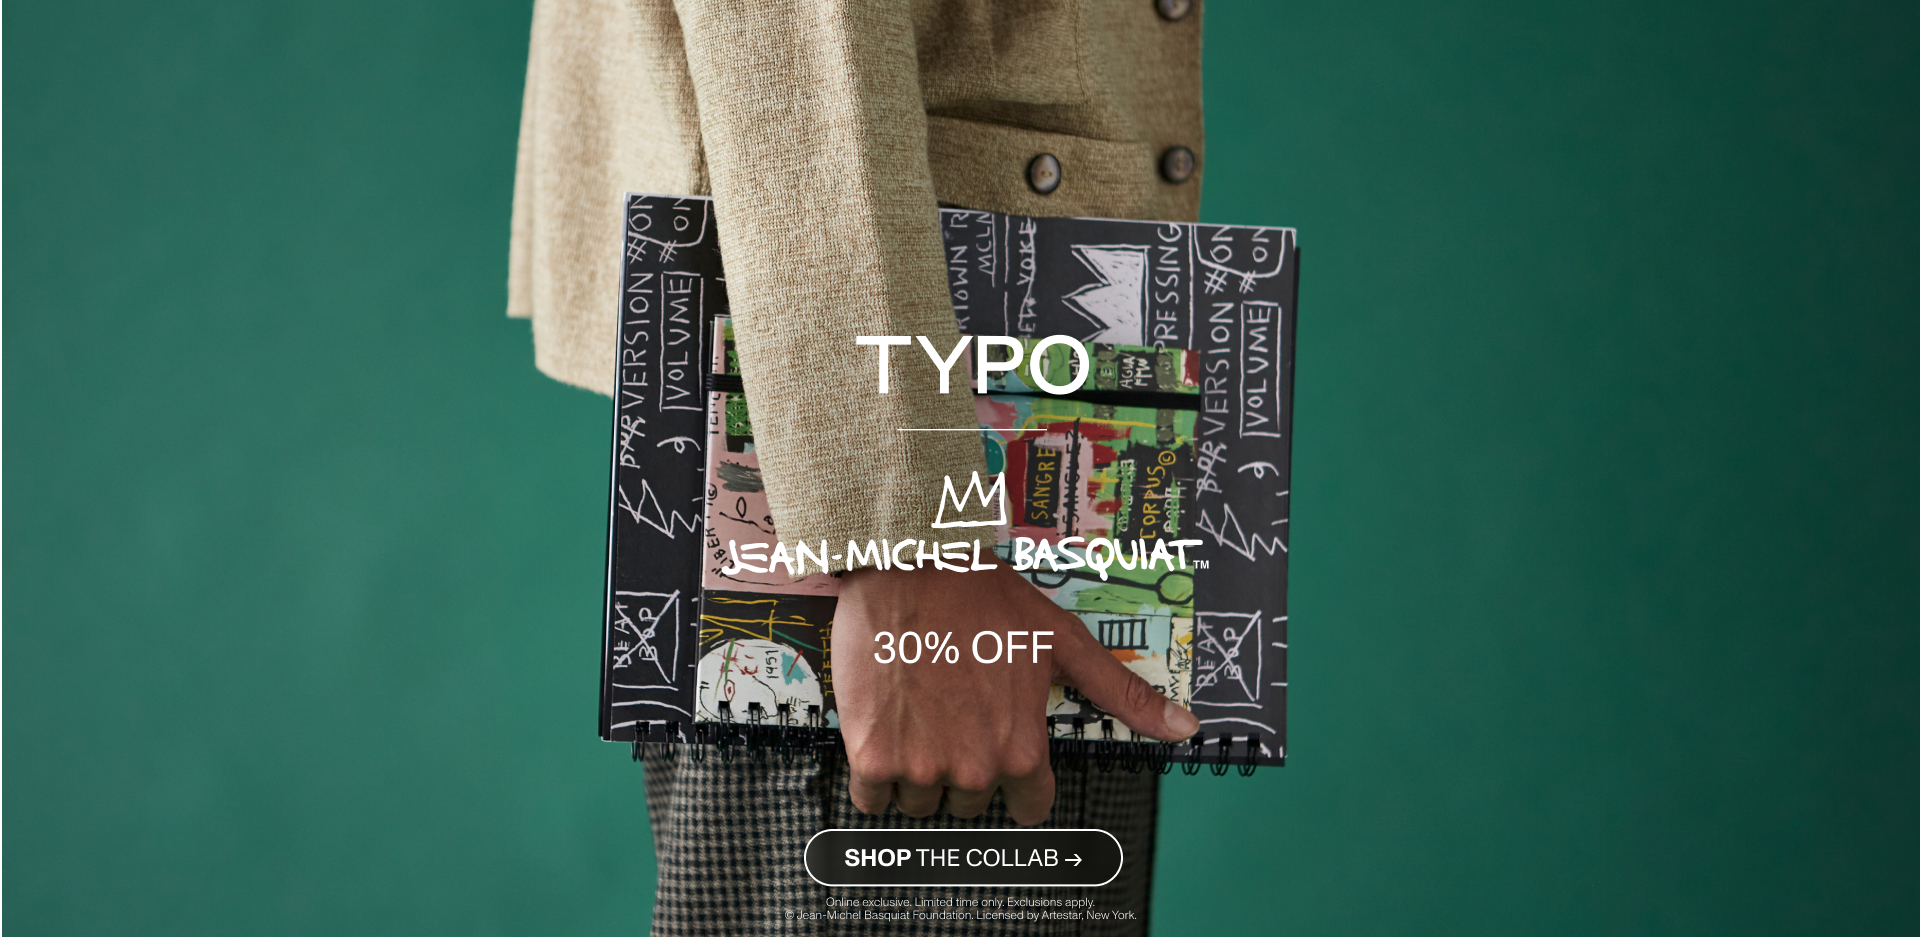 30% Off Typo x Jean-Michel Basquiat. Shop The Collab.